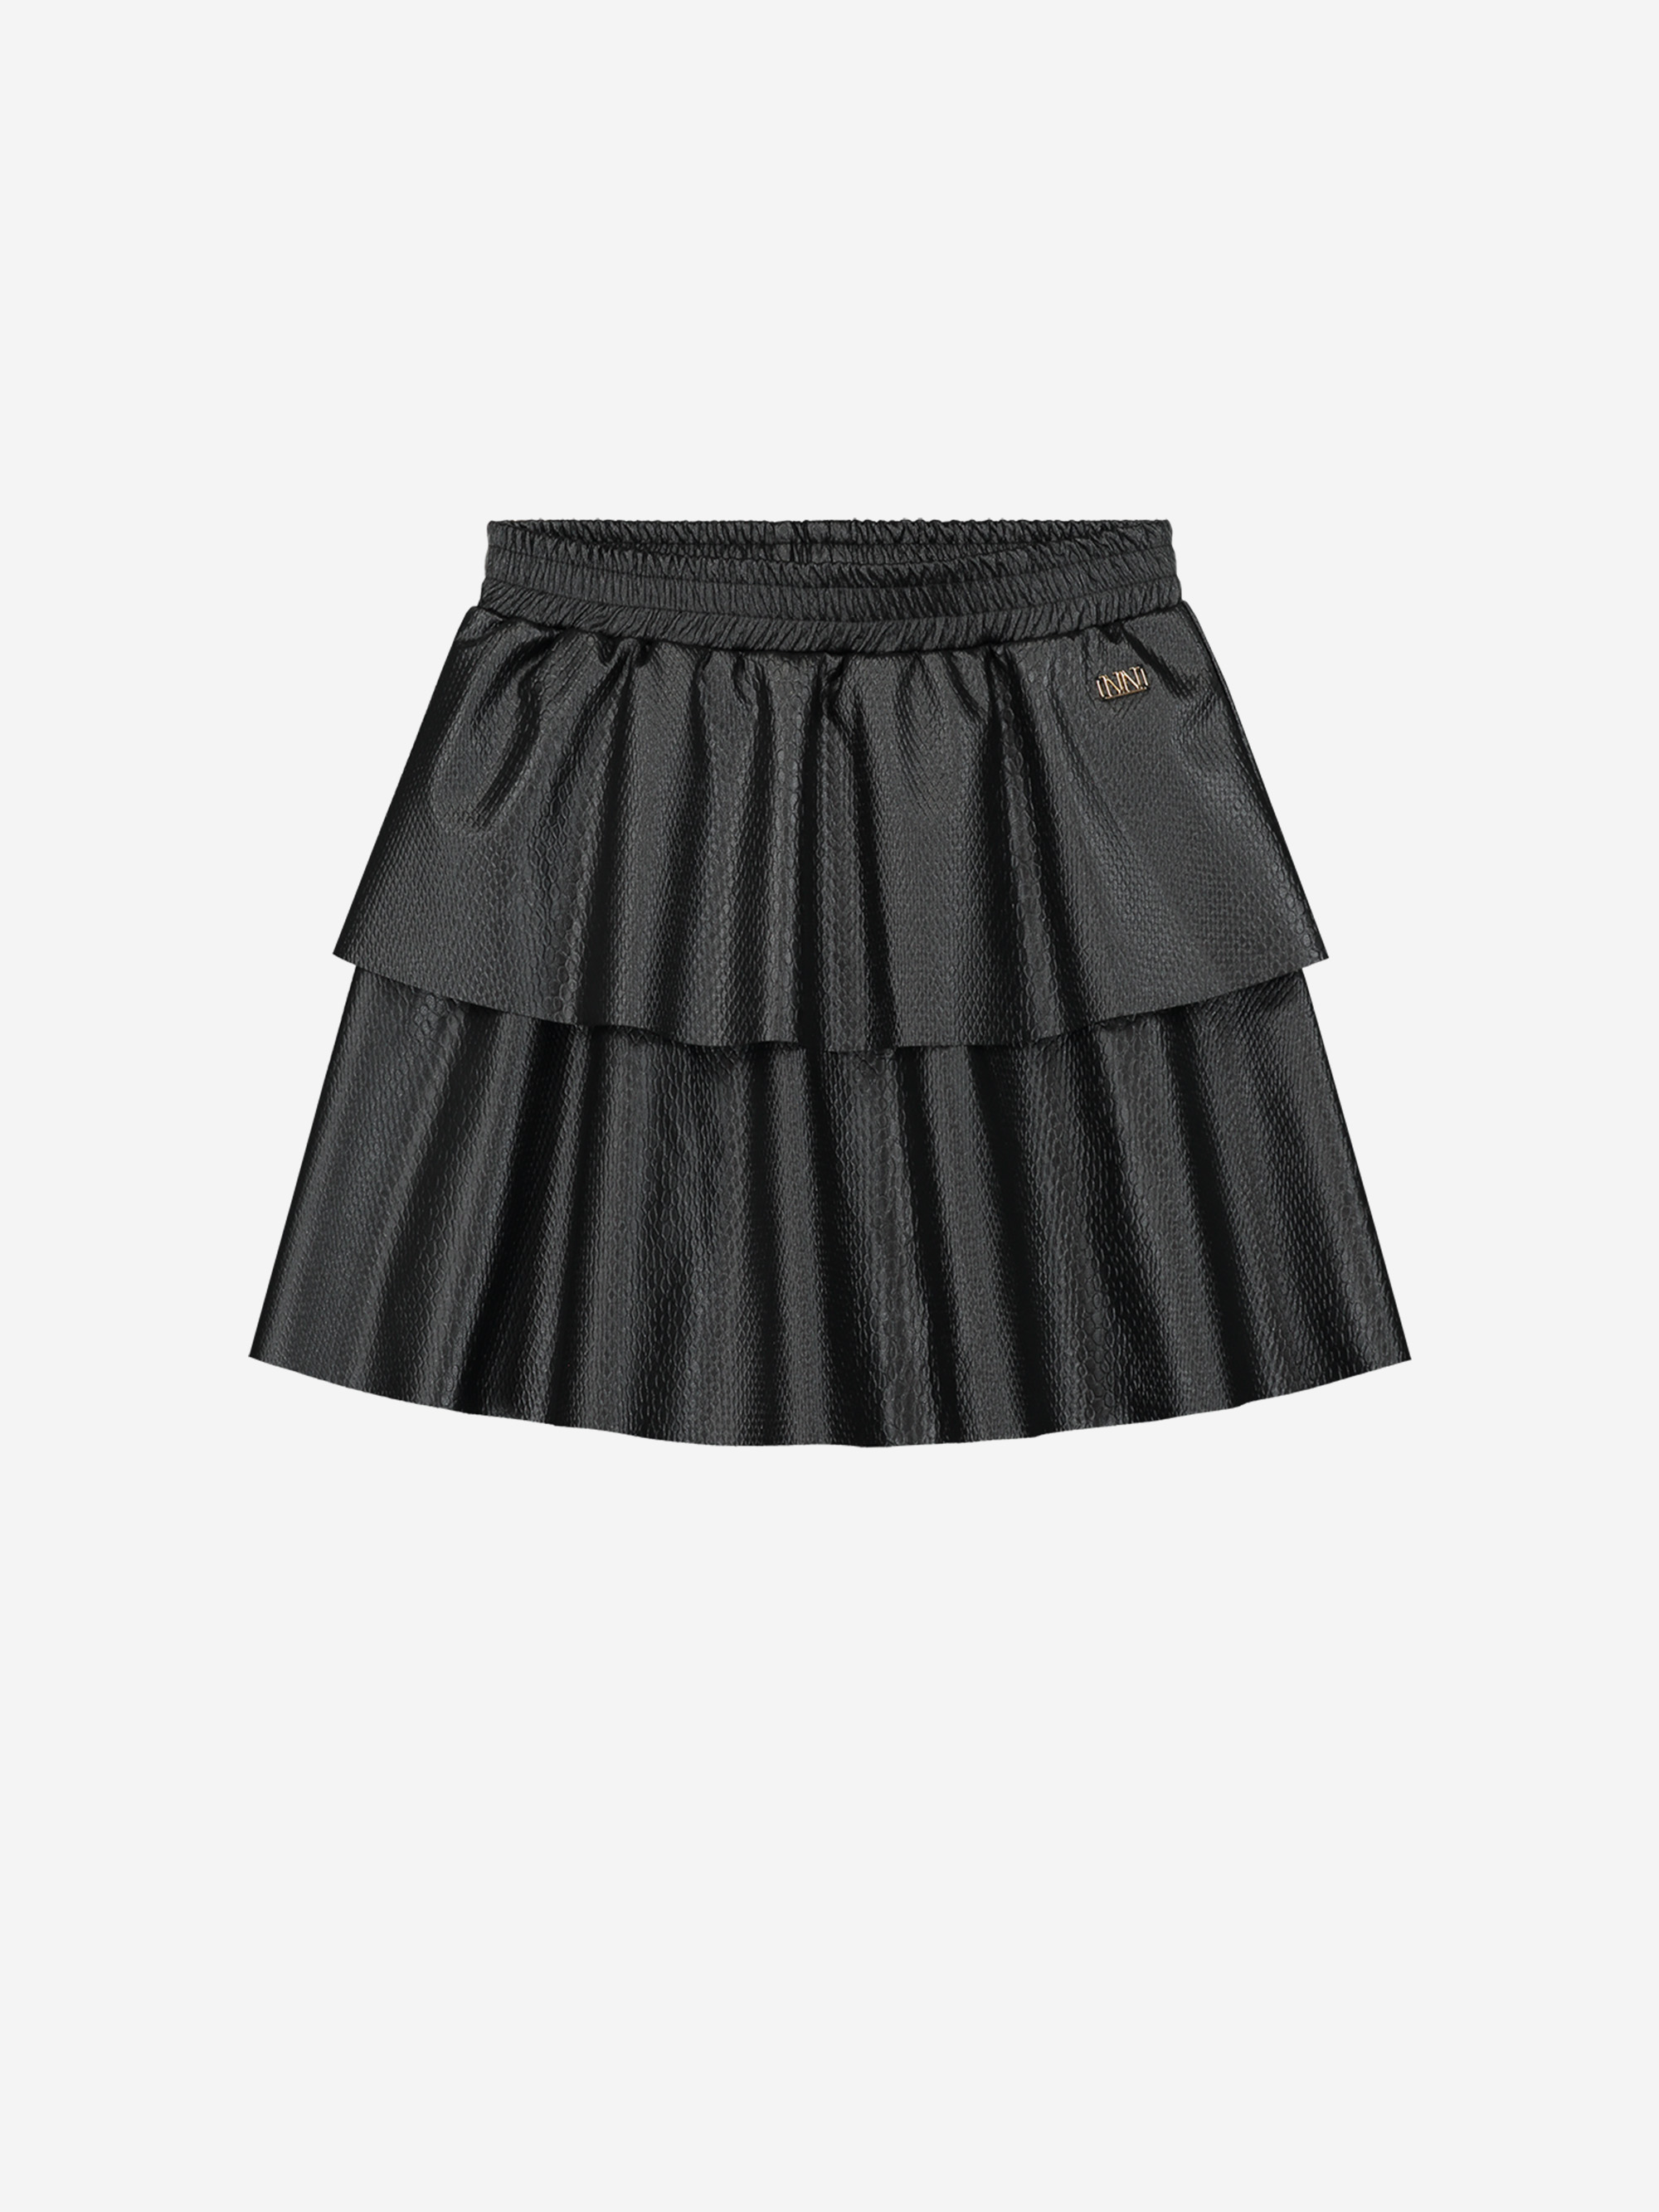 Croco skirt with ruffles